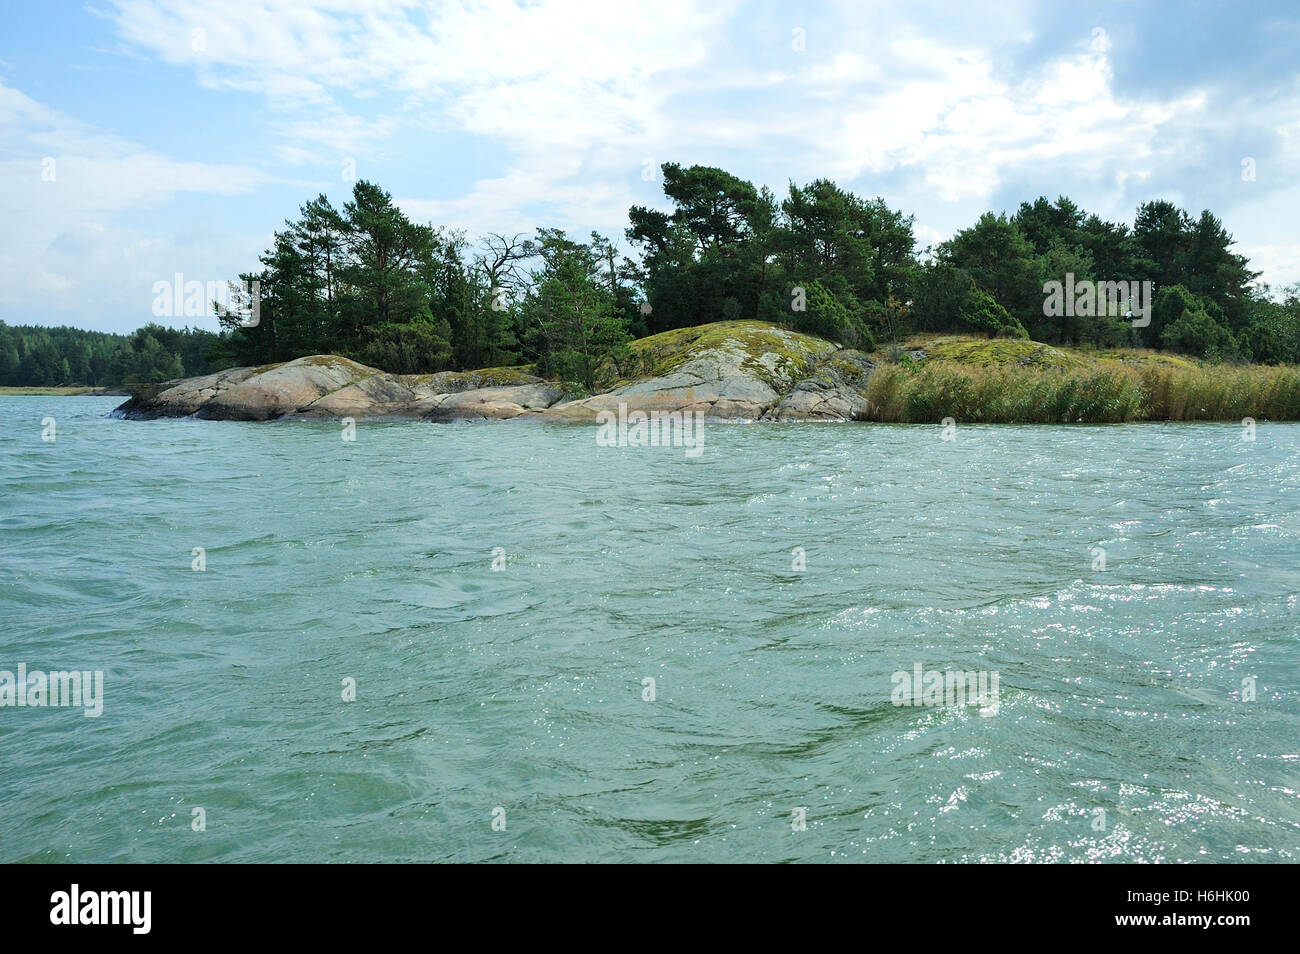 Archipelago island in the Gulf of Bothnia near Naantali, Finland Stock Photo